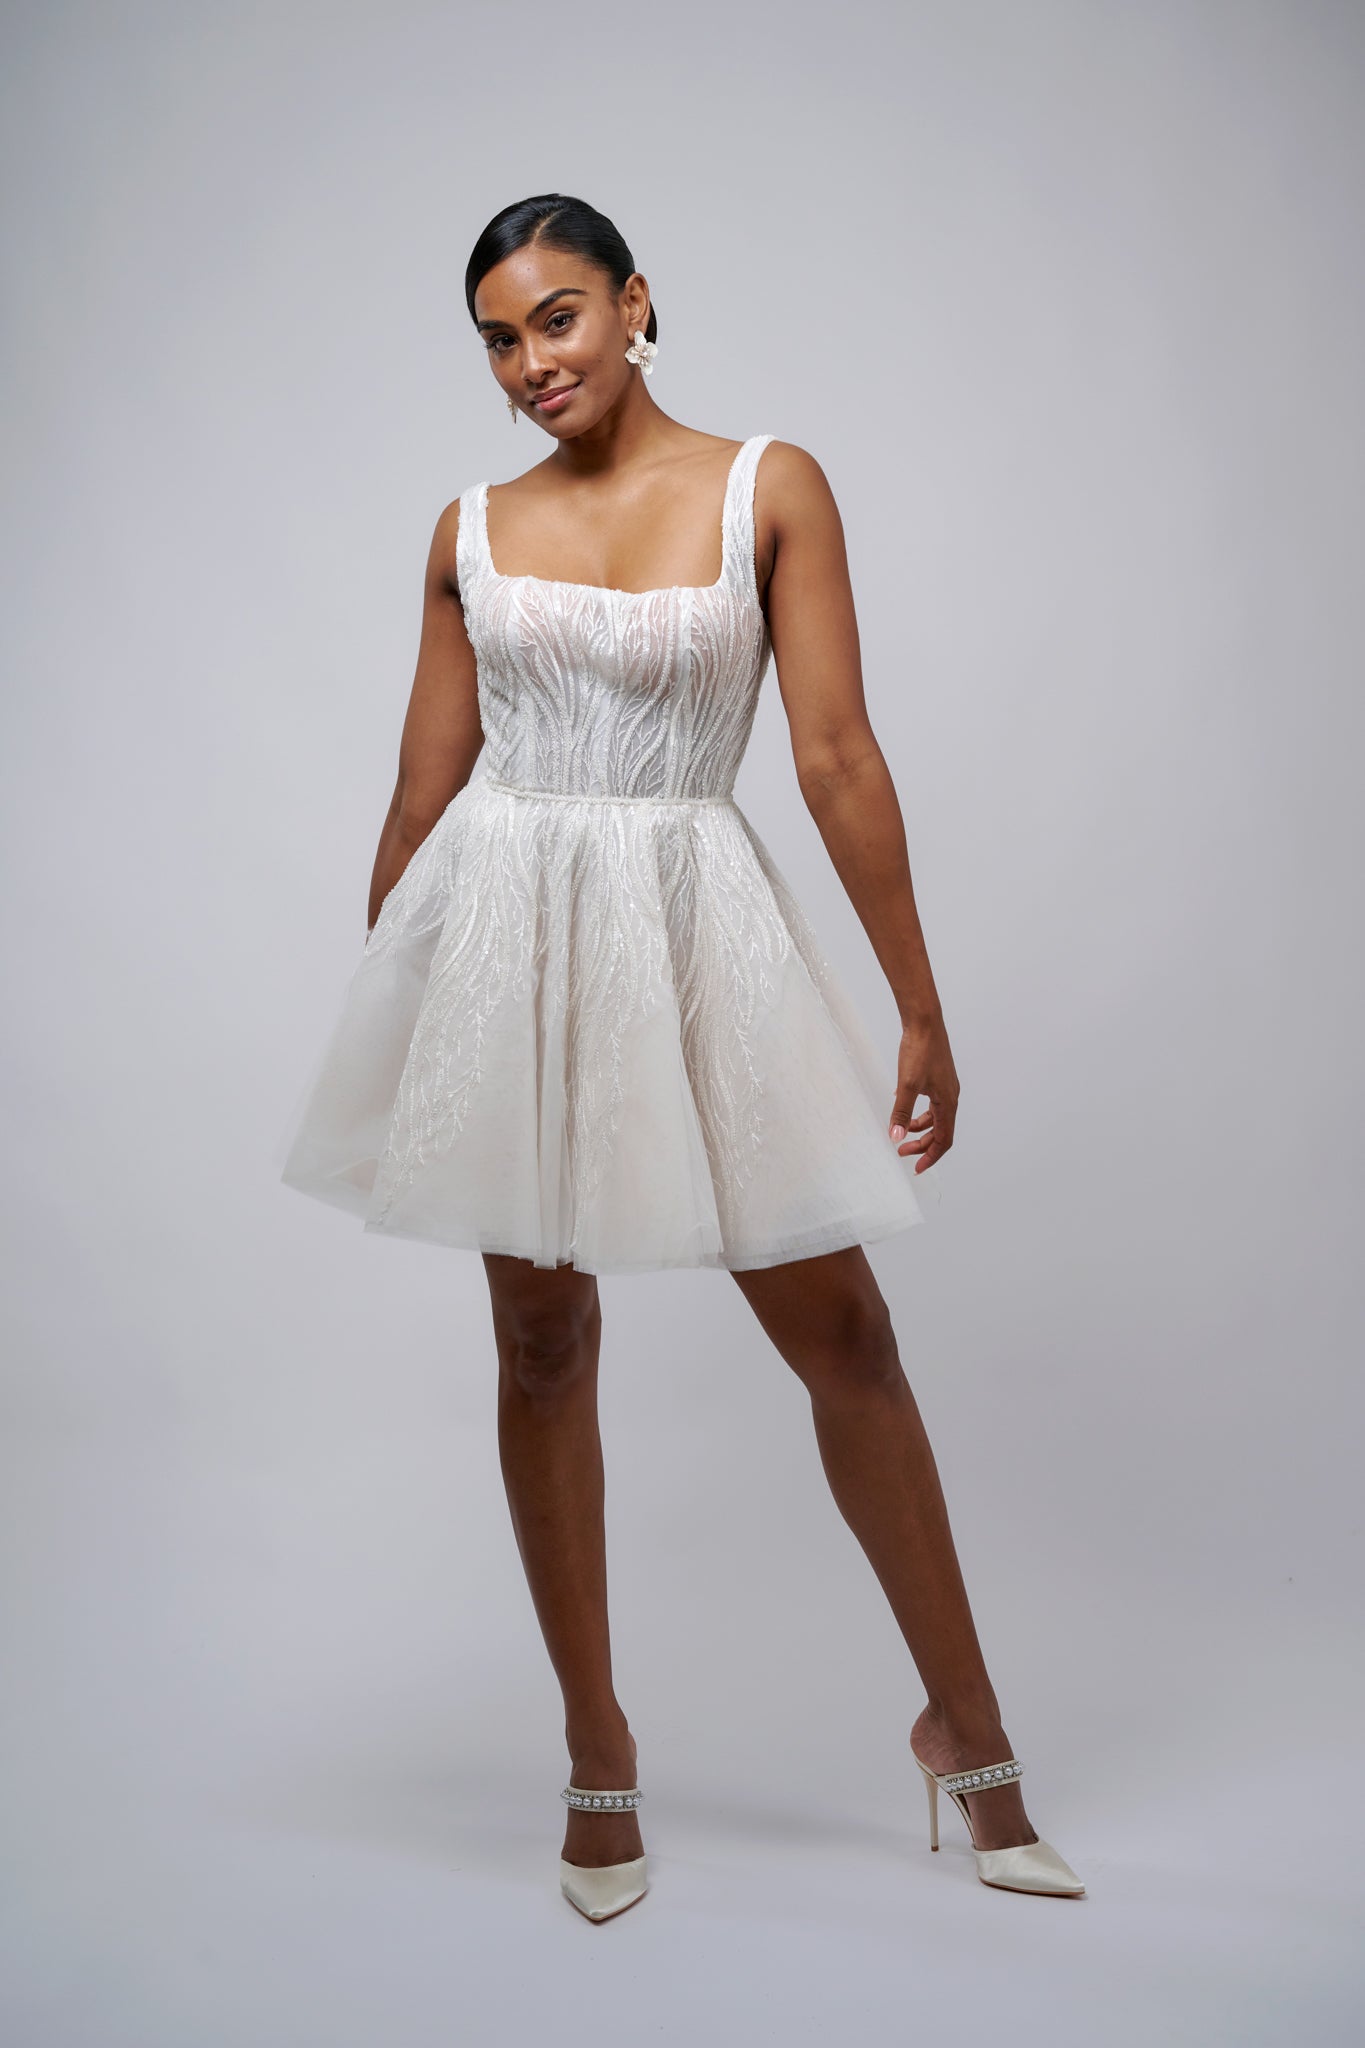 Hana by Euphorie  Mini Wedding Dresses & Wedding Reception Gowns